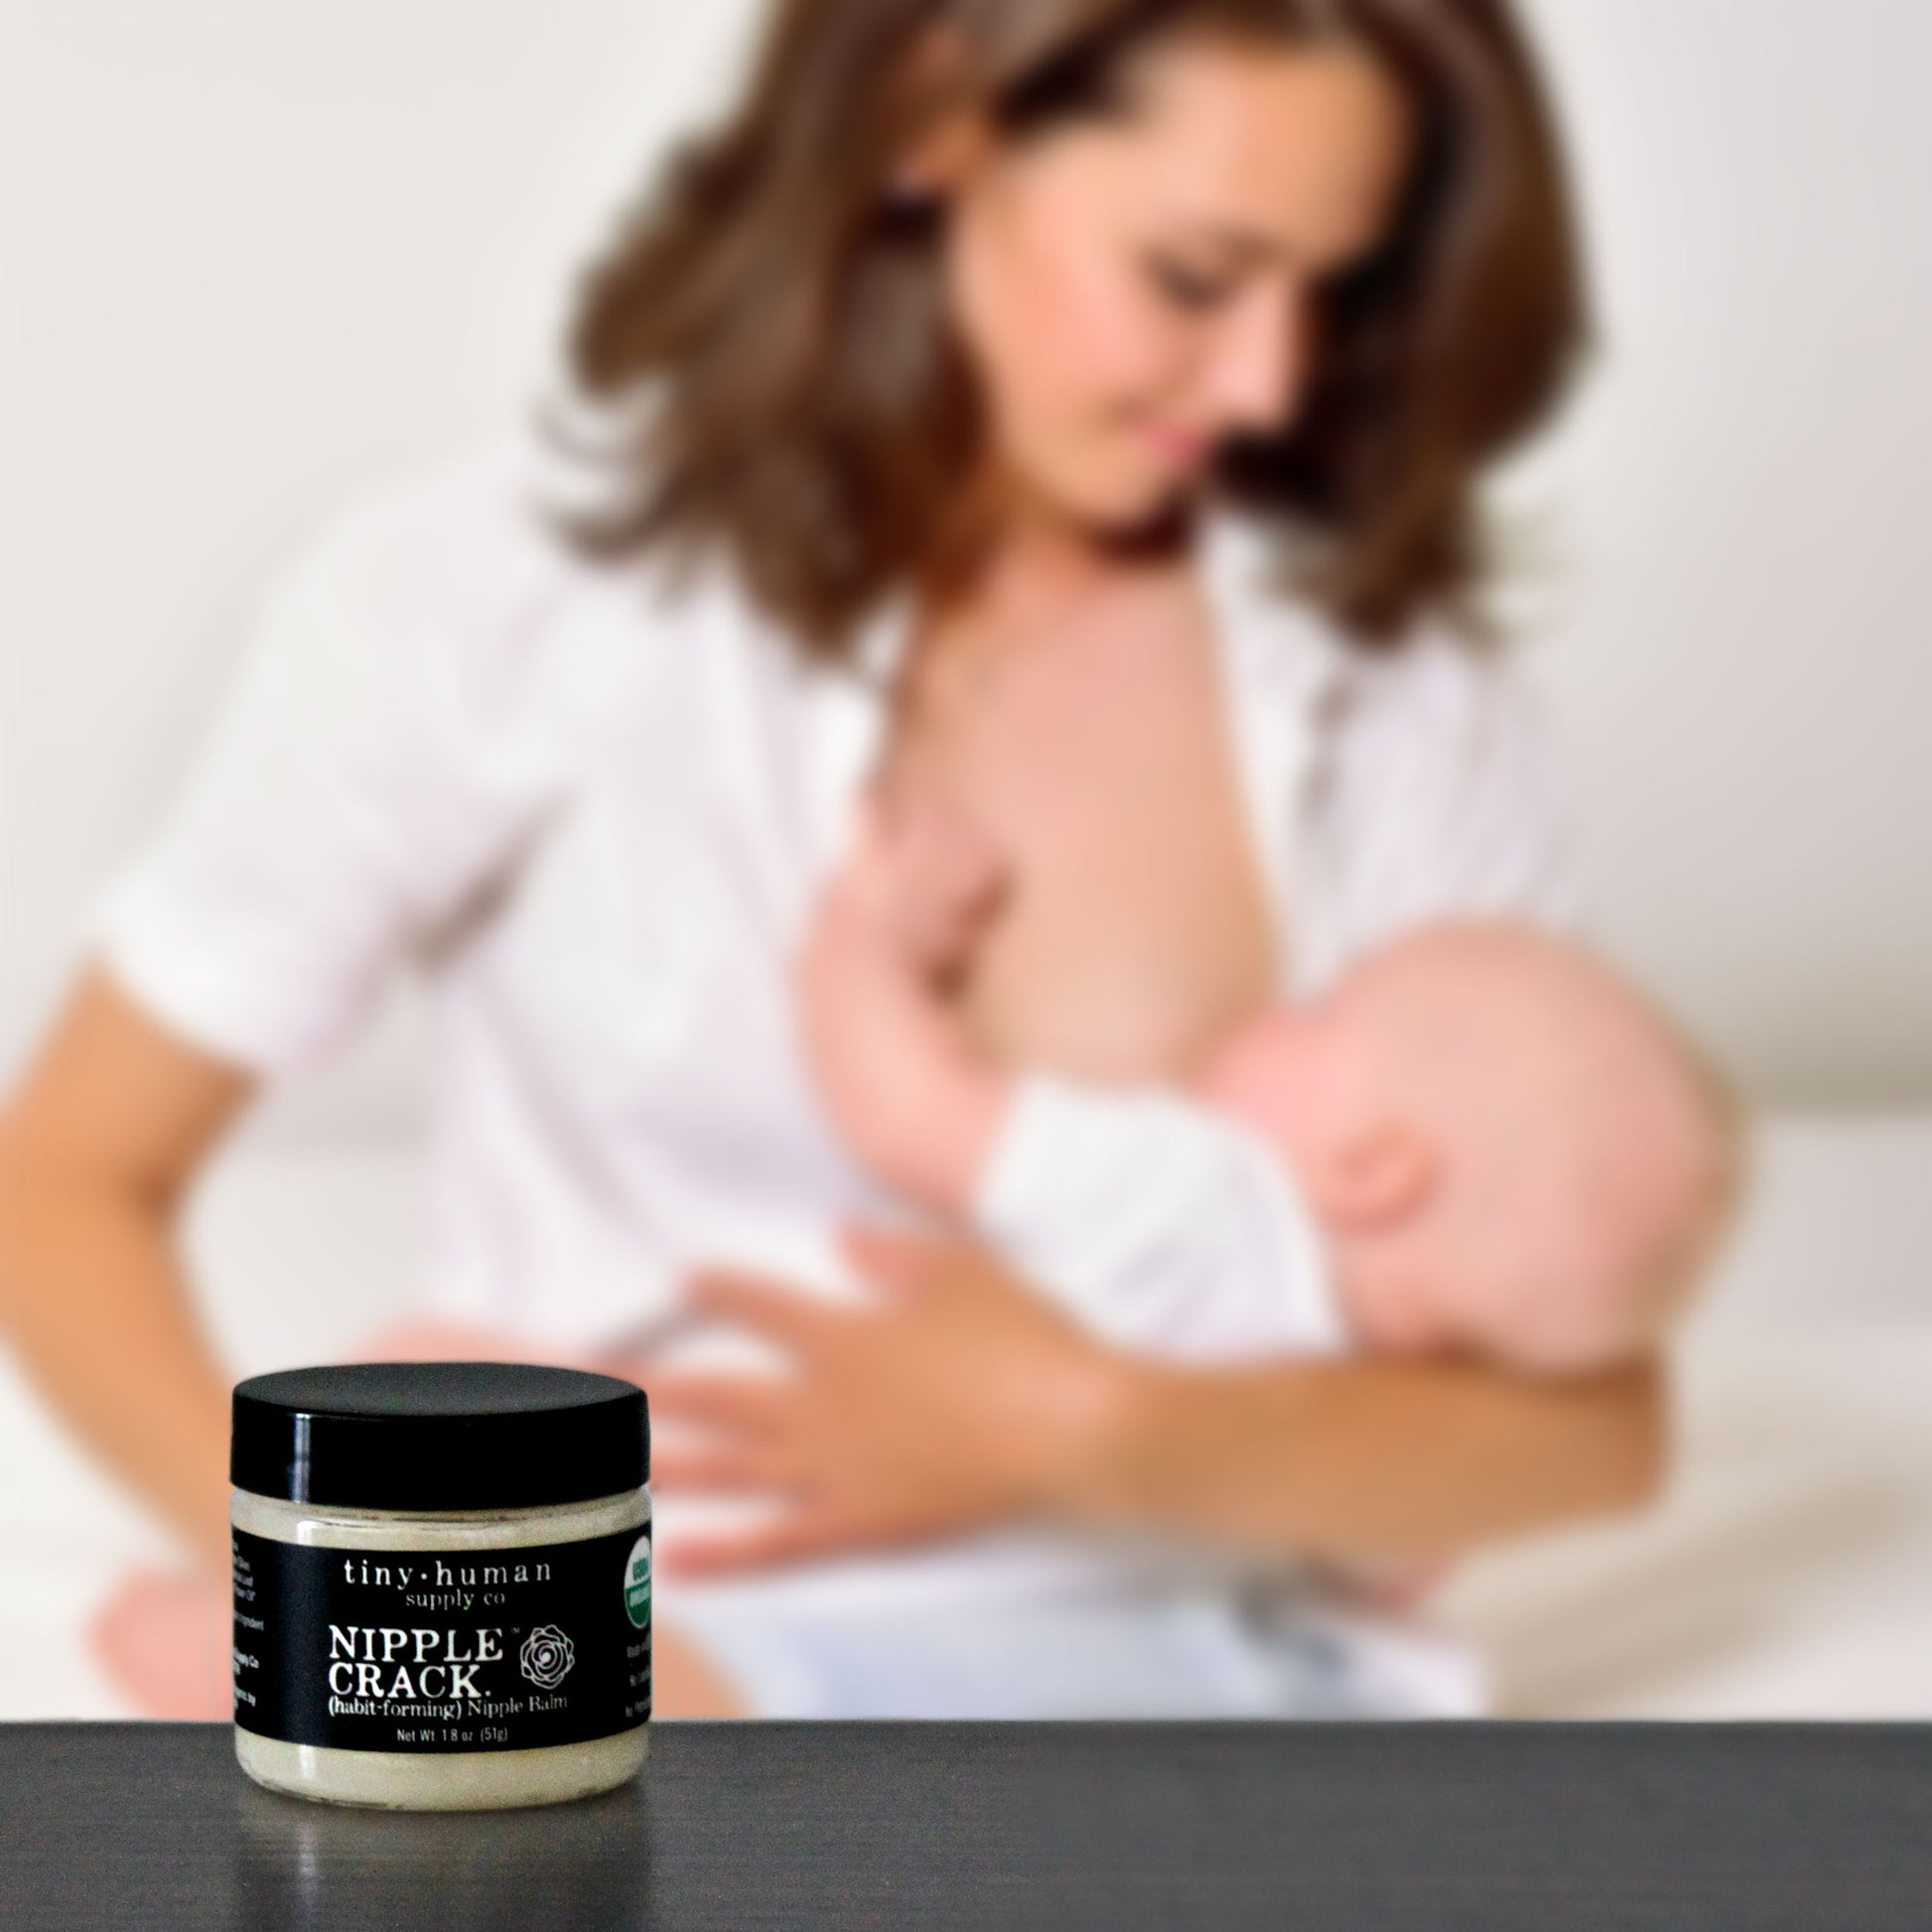 All-Natural Nipple Cream for Breastfeeding